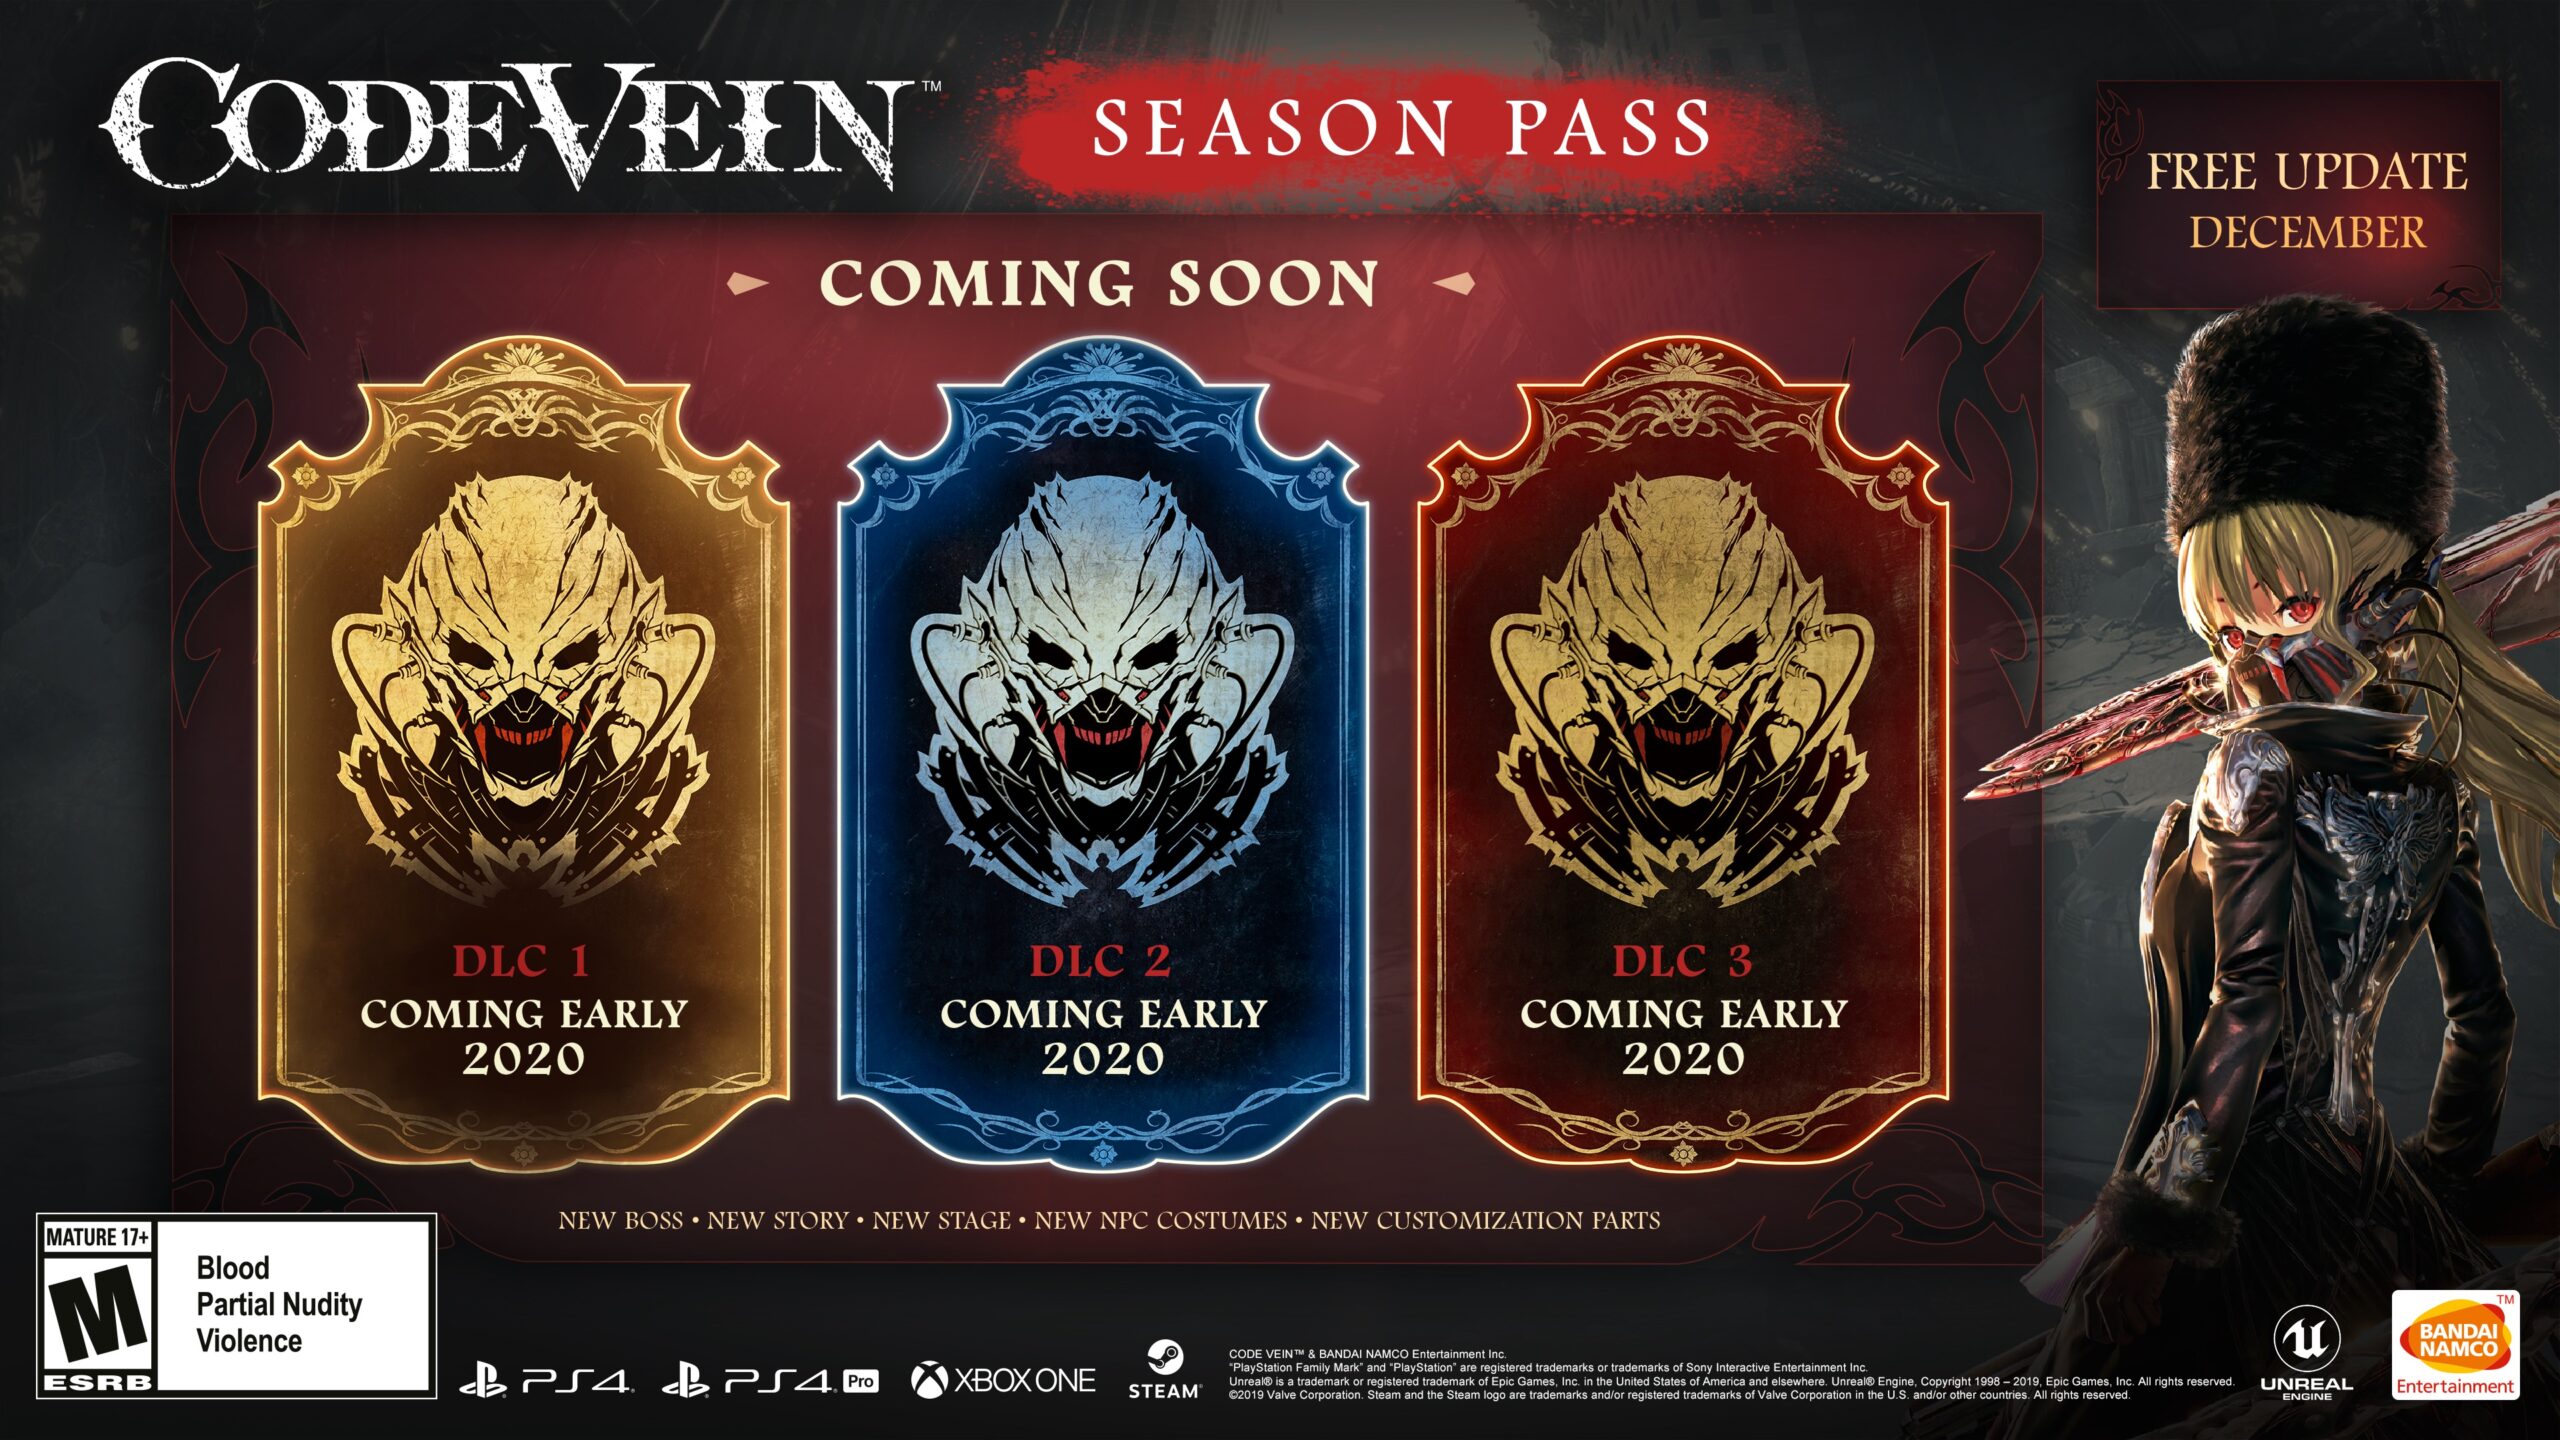 DLC Release Dates: All Season Pass Content